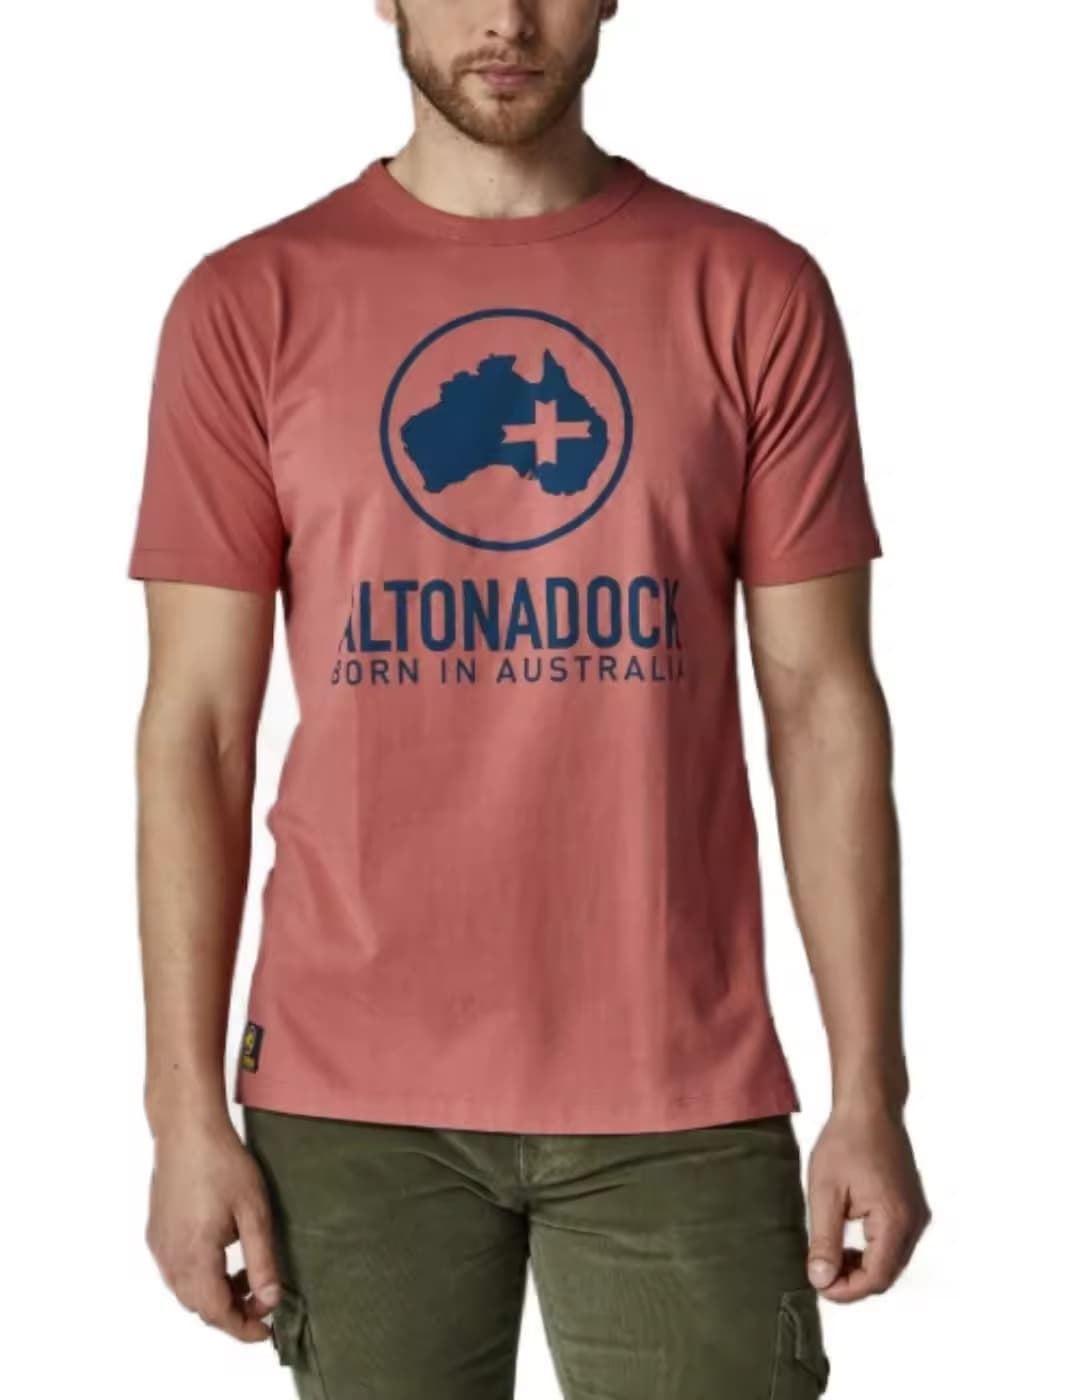 Camiseta Altonadock 104959 naranja - Imagen 1